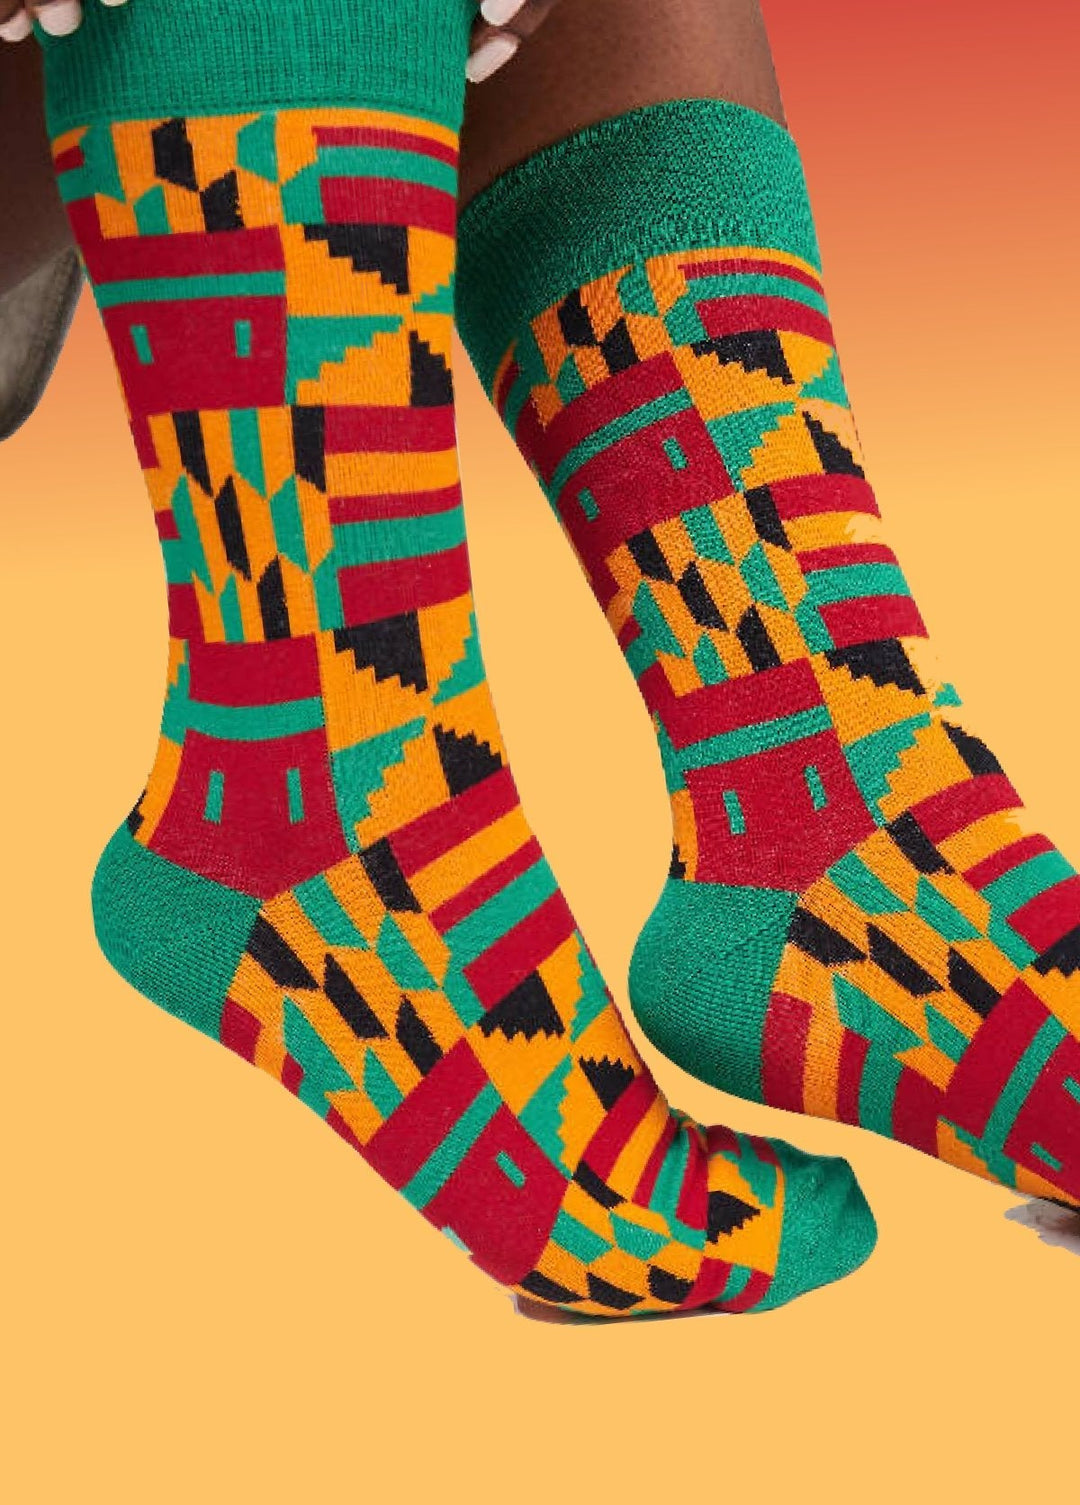 Socken aus Kenia ‚Kente‘ - mikono.africa Jacken aus Kenia bunte Bomberjacke Partyjacke faire sozial nachhaltig designed in Kenia